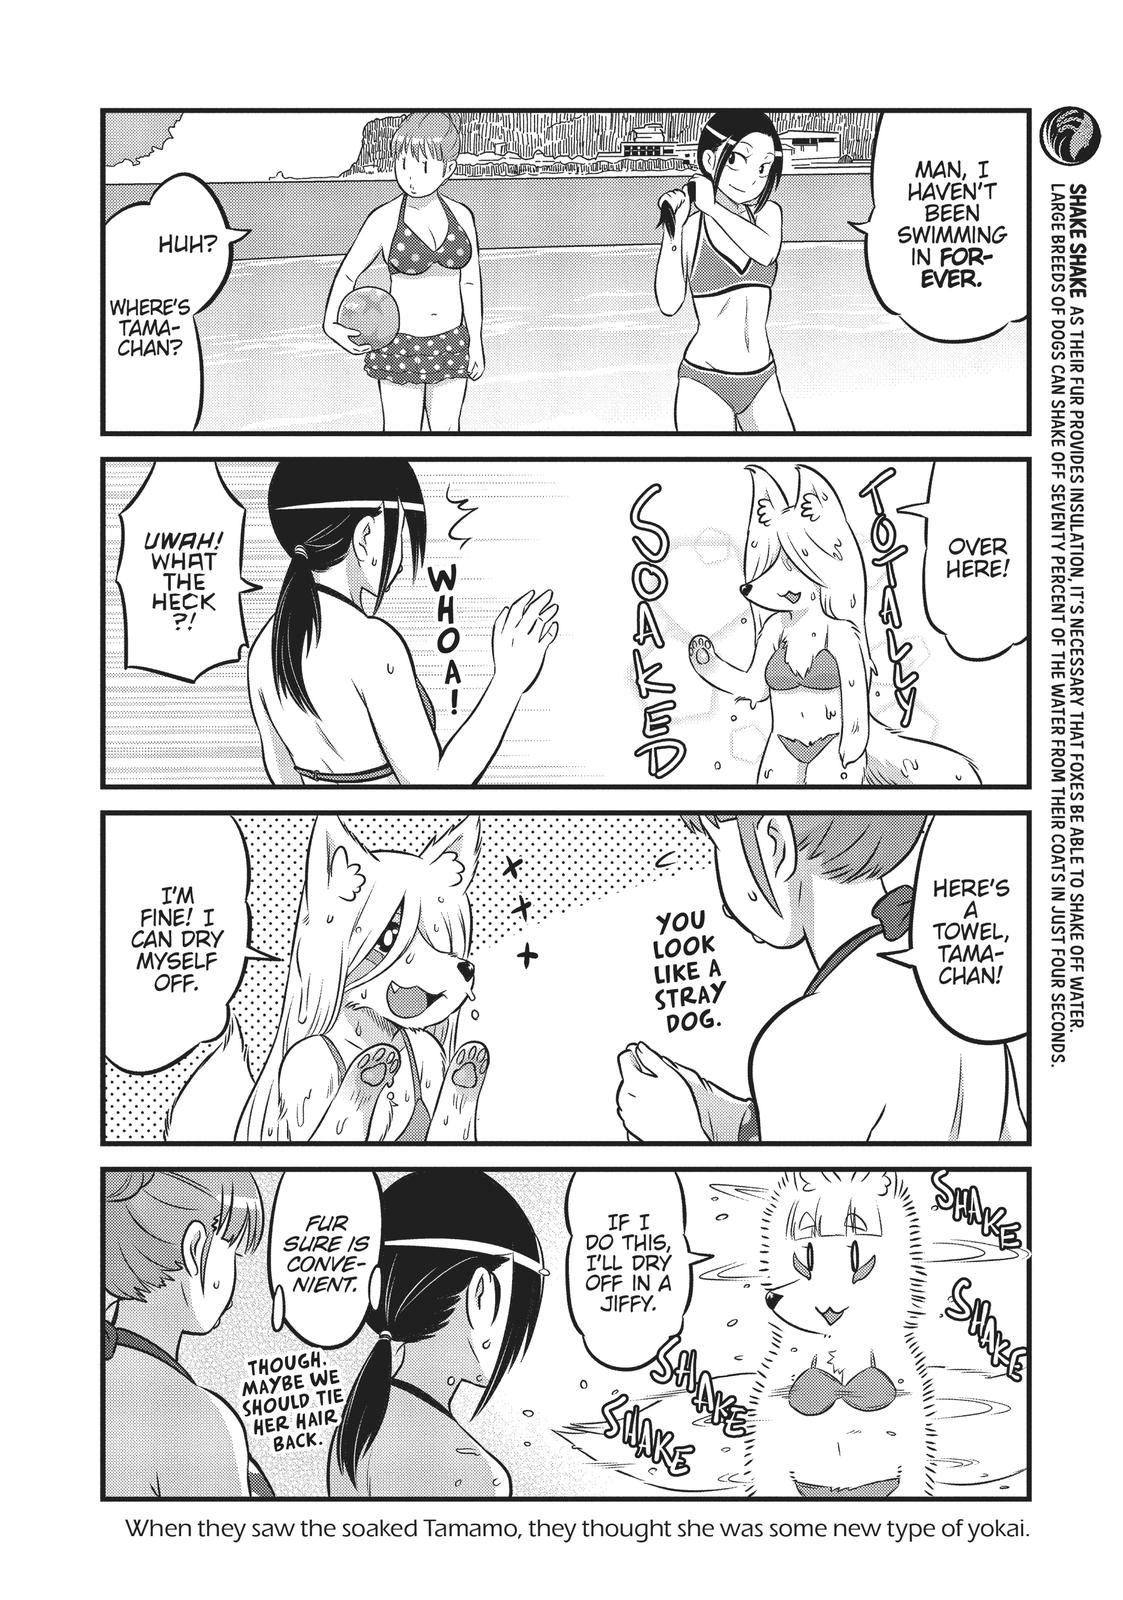 Tamamo-chan's a Fox! - chapter 14 - #6